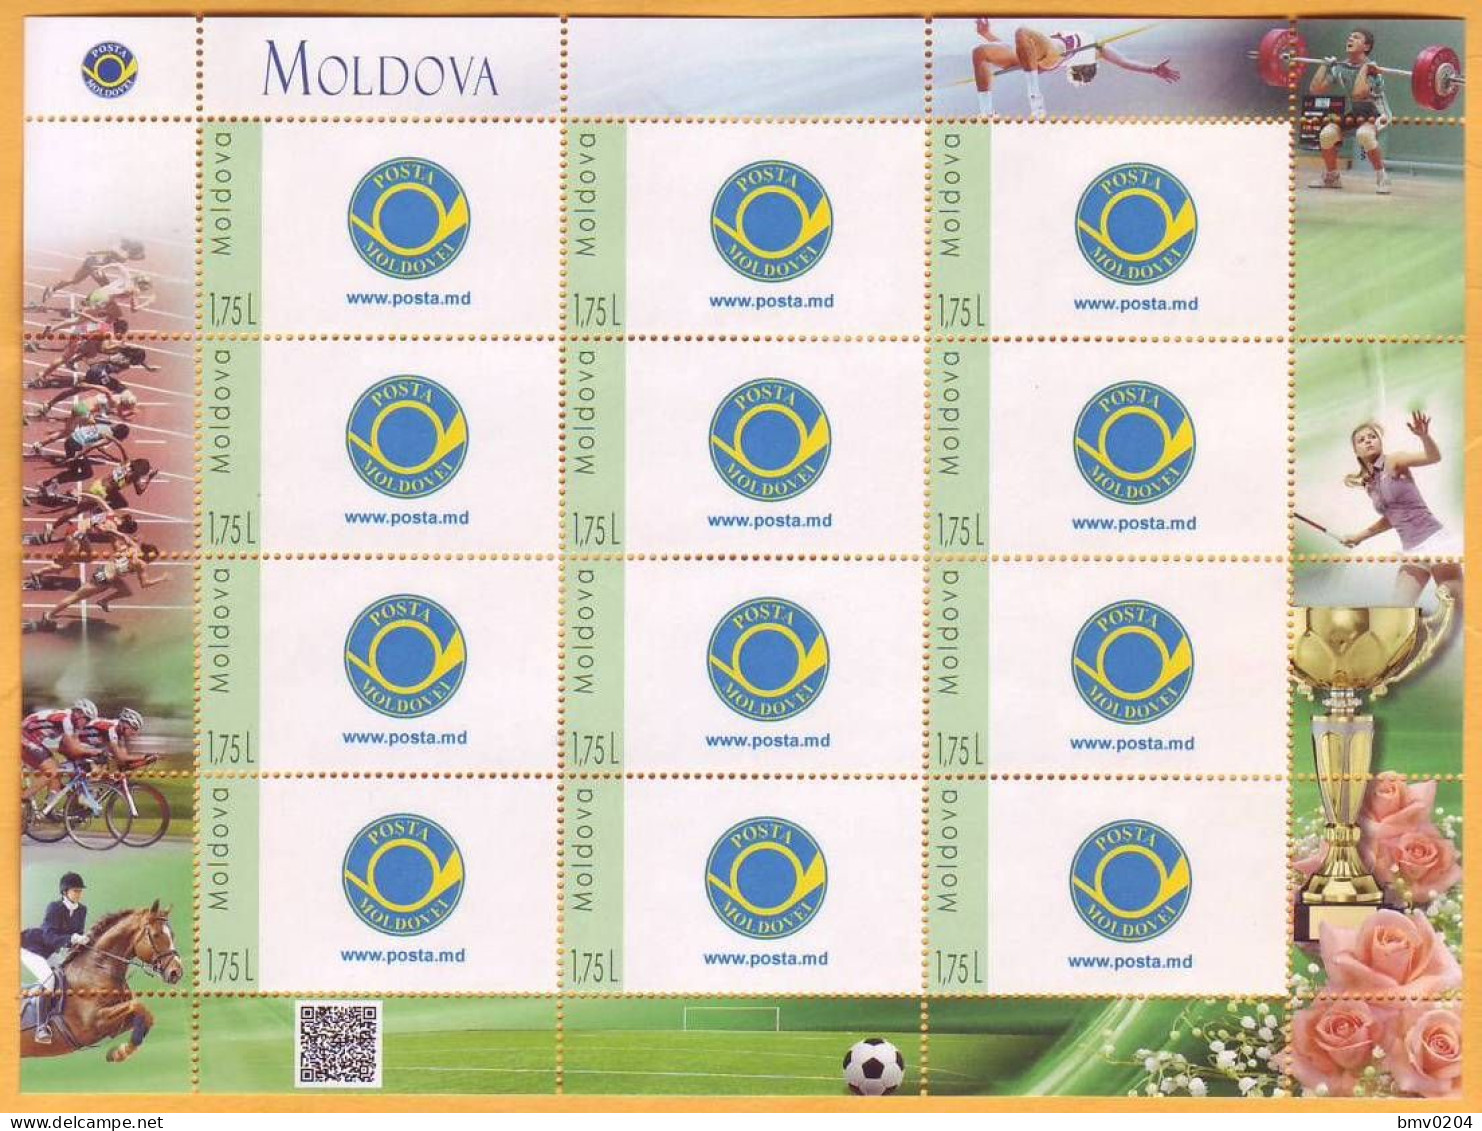 2015 Moldova  7 sheets  Personalized release III - Sport, art, medicine, space, literature, theater, cinema. mint